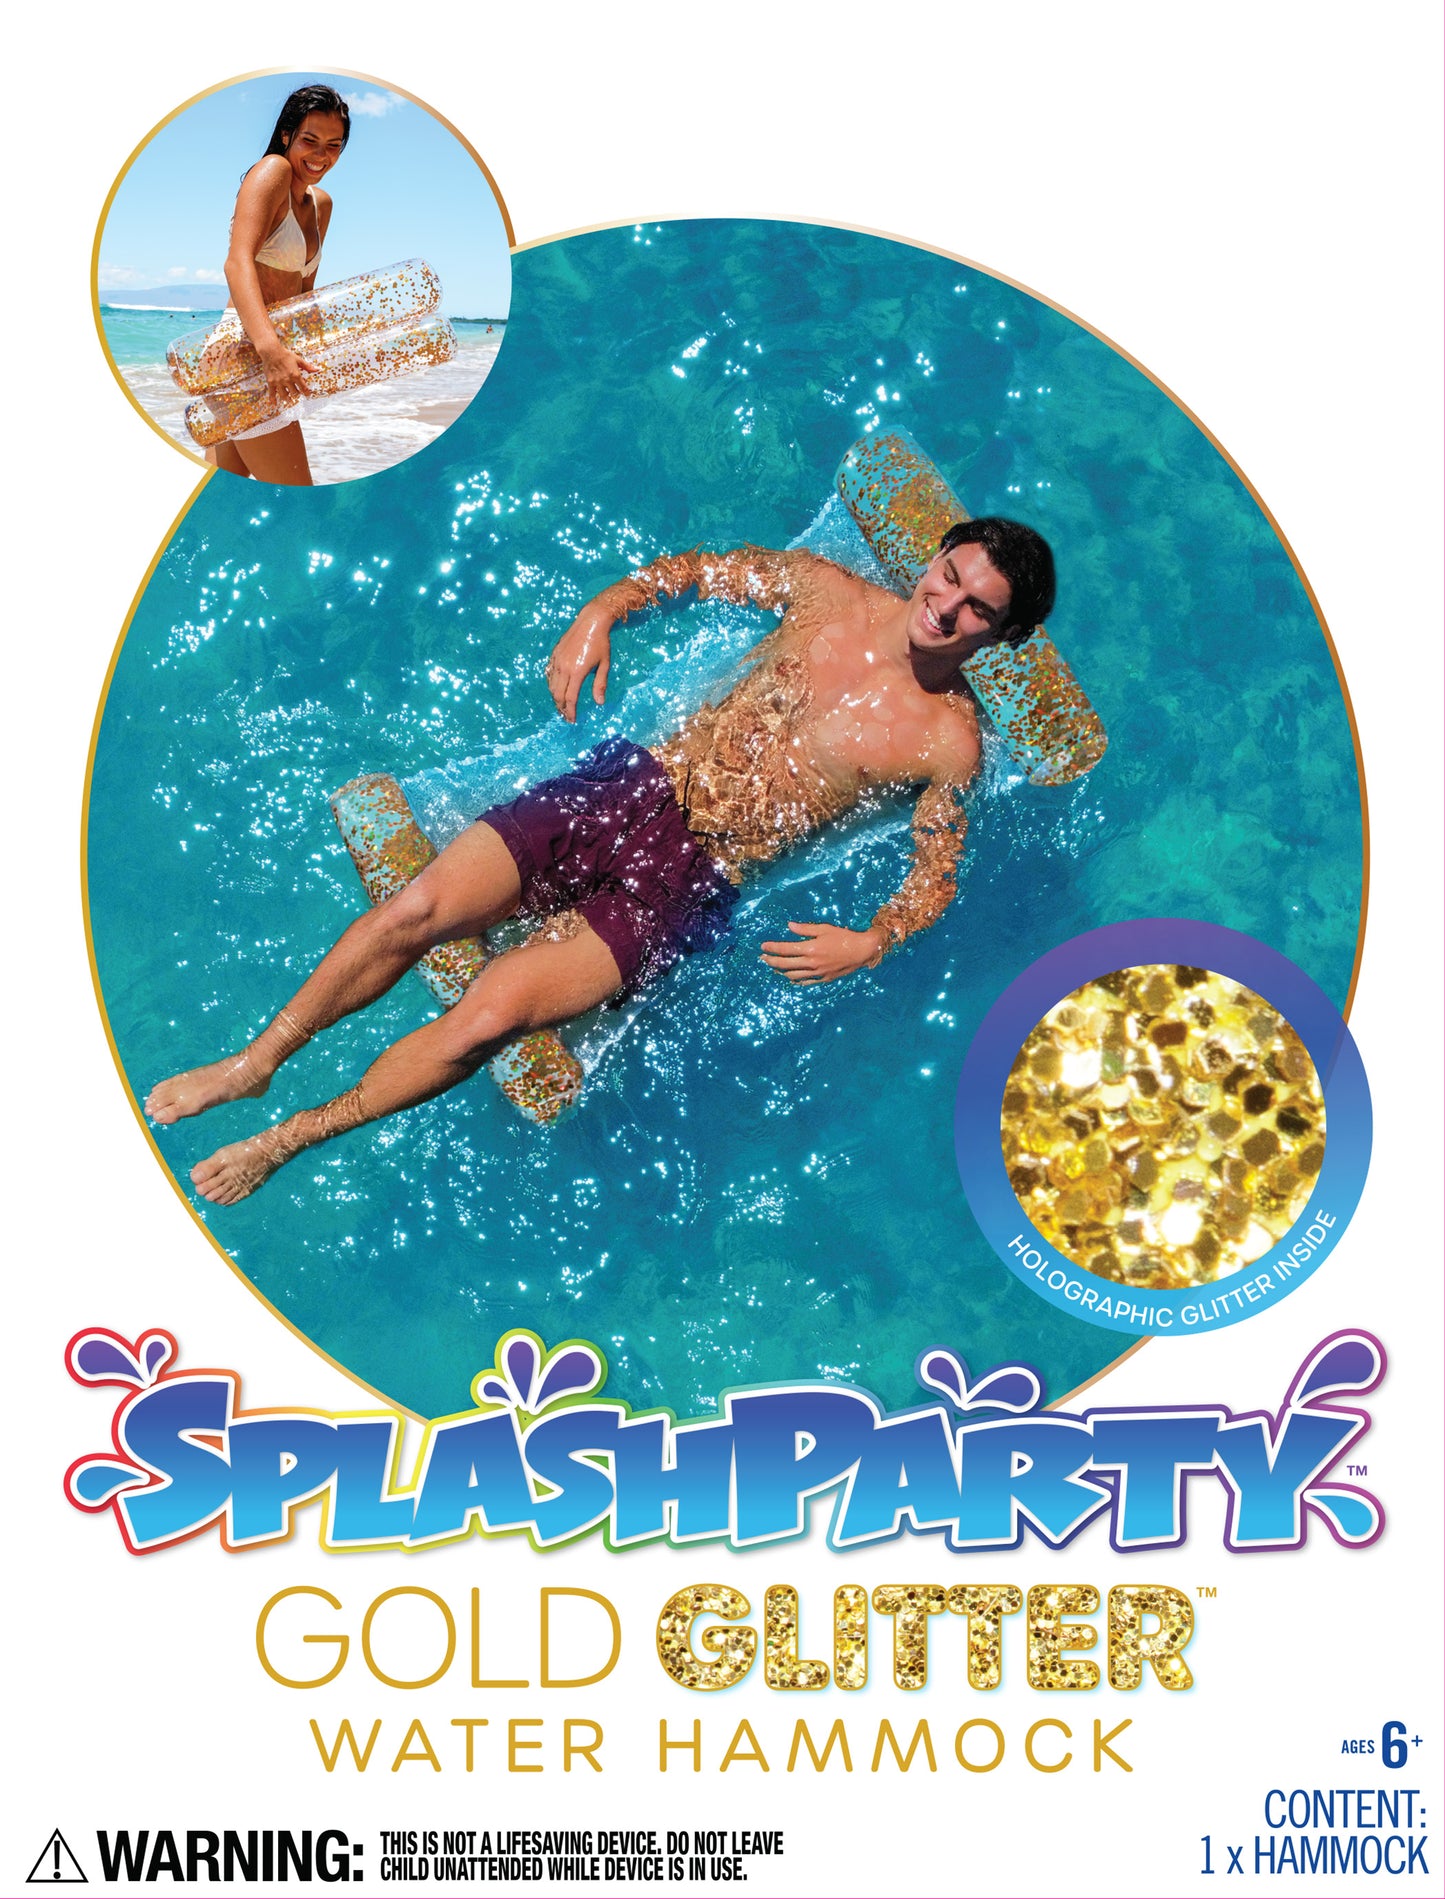 SplashParty Gold Glitter Pool Hammock